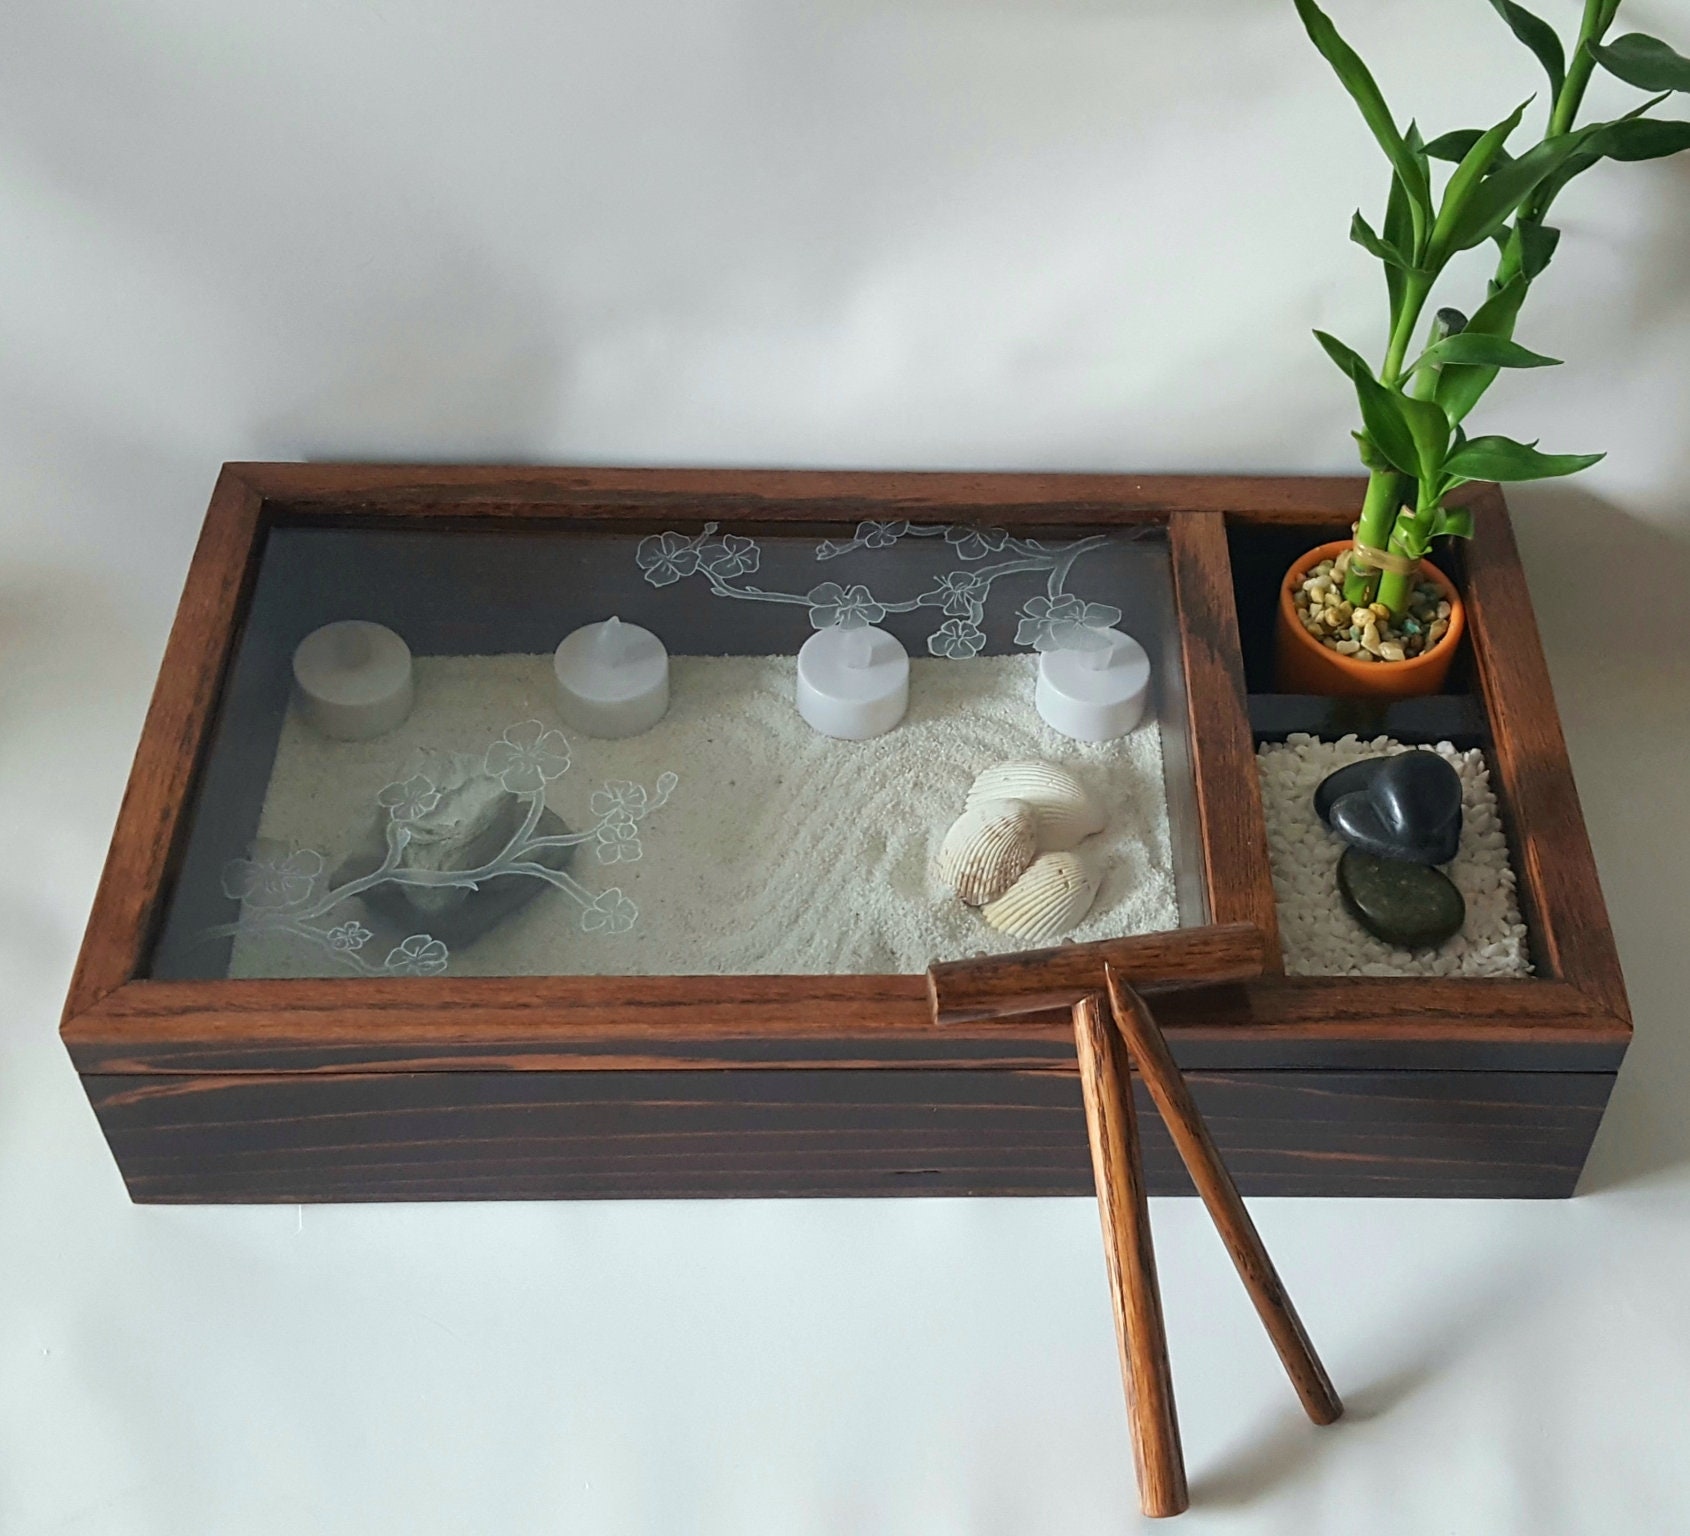 HABITU Japanese Zen Garden for Desk With Meditation Accessories